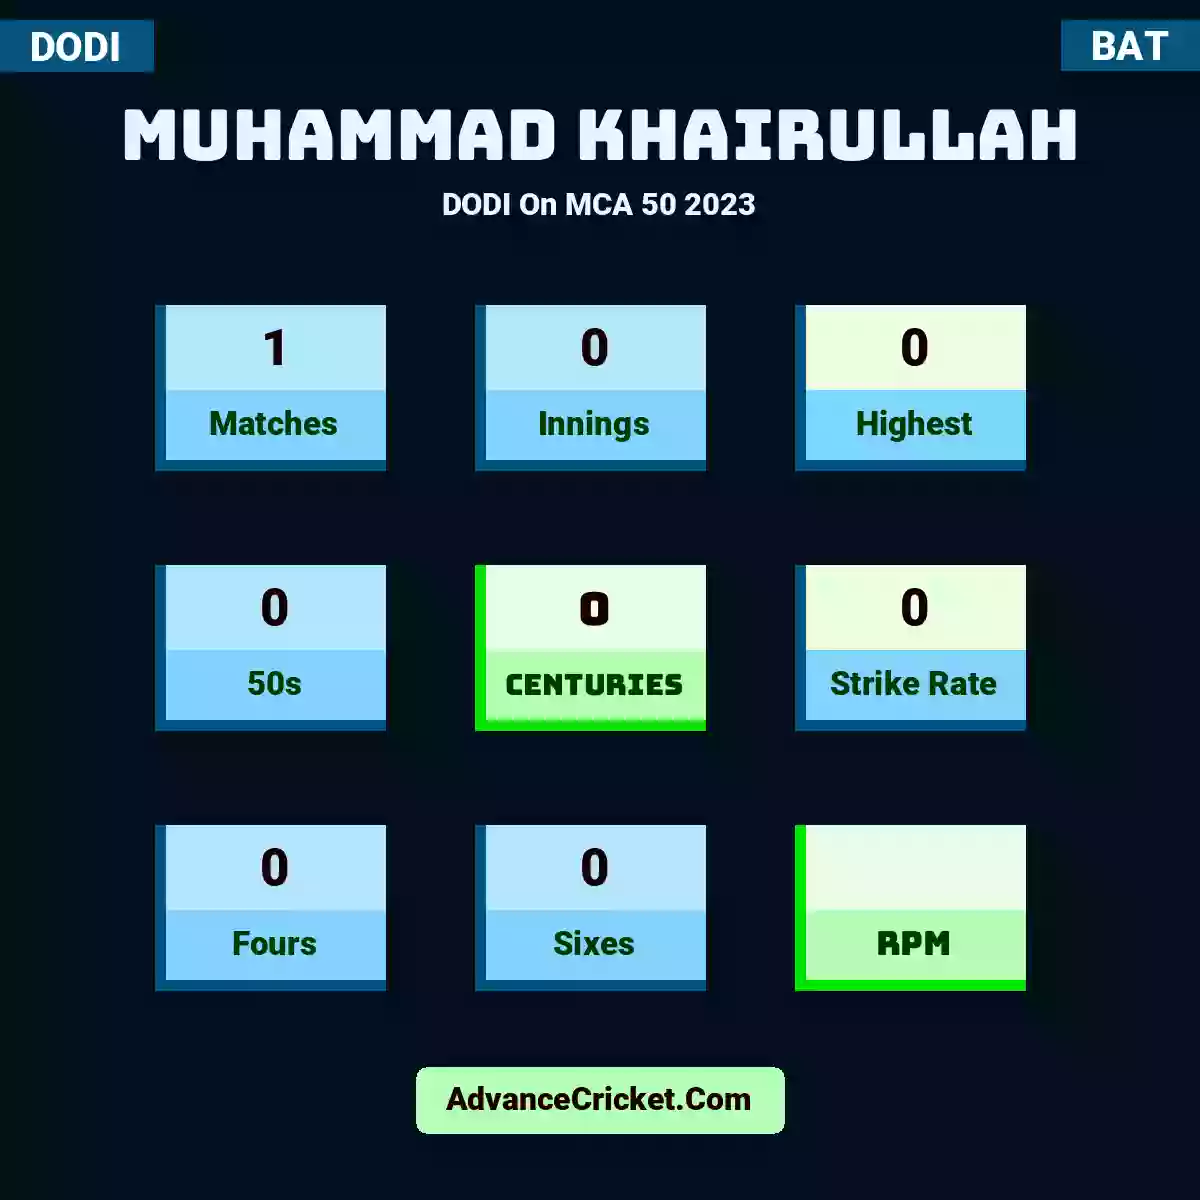 Muhammad Khairullah DODI  On MCA 50 2023, Muhammad Khairullah played 1 matches, scored 0 runs as highest, 0 half-centuries, and 0 centuries, with a strike rate of 0. M.Khairullah hit 0 fours and 0 sixes.